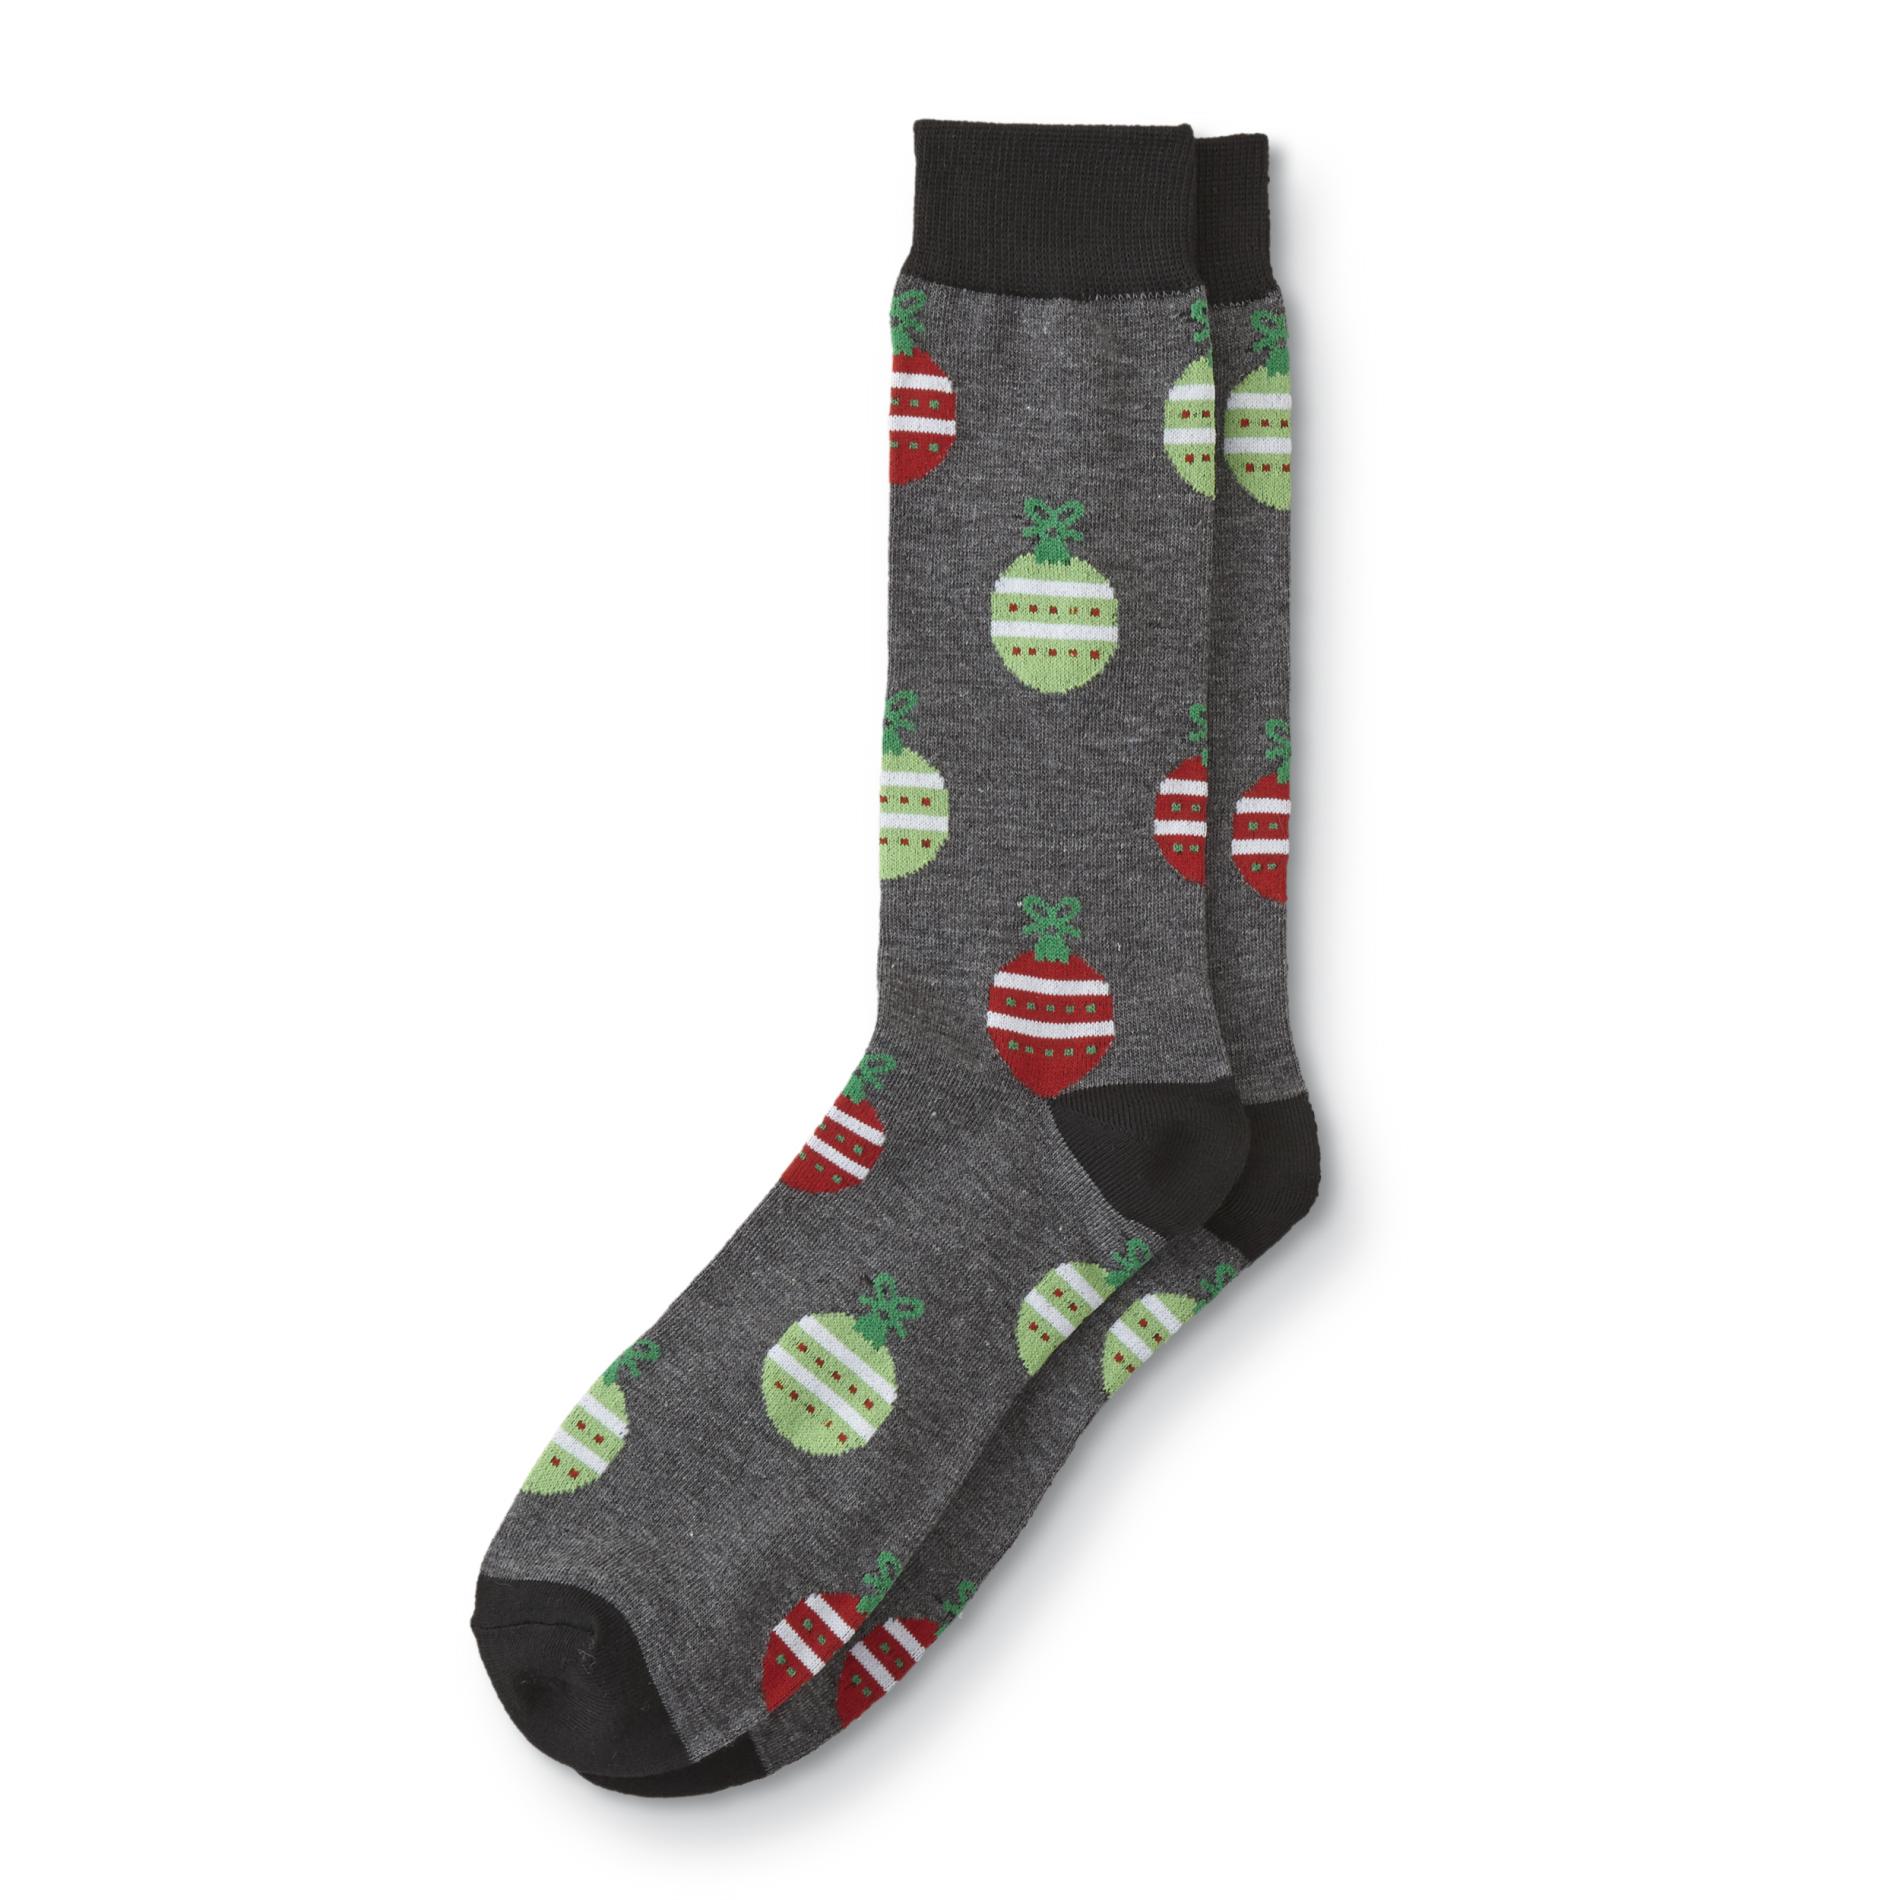 Joe Boxer Men's Christmas Crew Socks - Ornaments